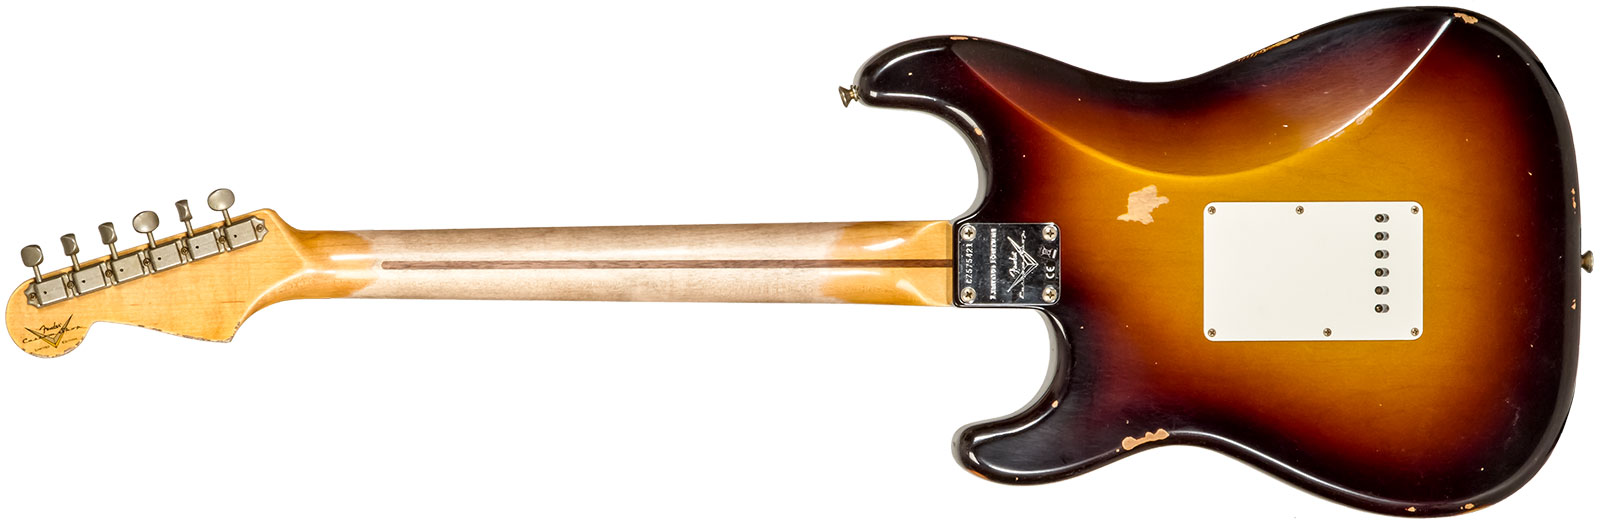 Fender Custom Shop Strat 1957 3s Trem Mn #cz575421 - Relic 2-color Sunburst - Guitarra eléctrica con forma de str. - Variation 1